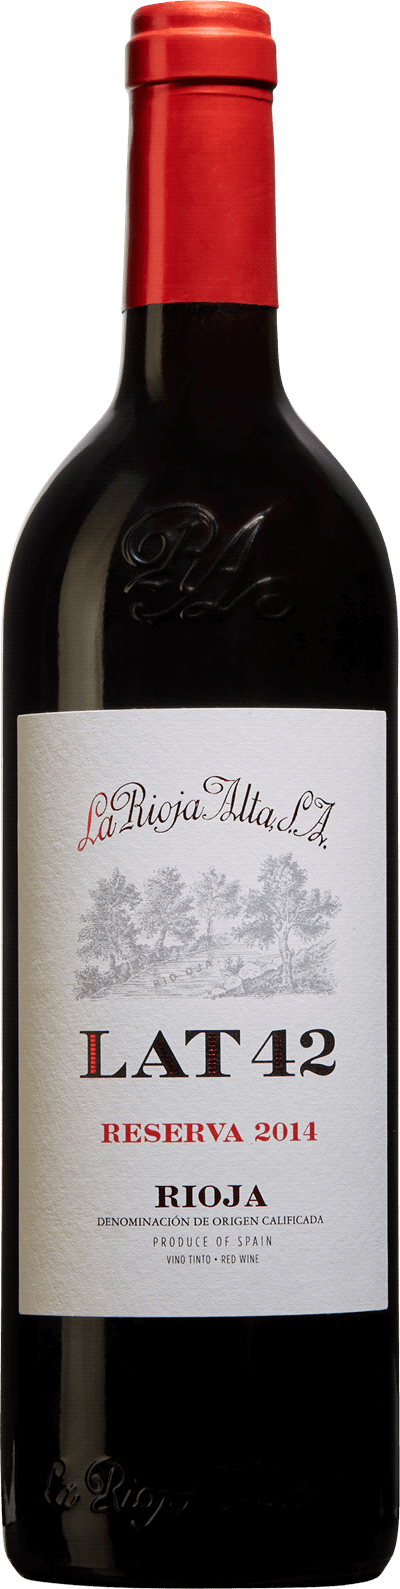 La Rioja Alta Lat 42 Reserva 2015